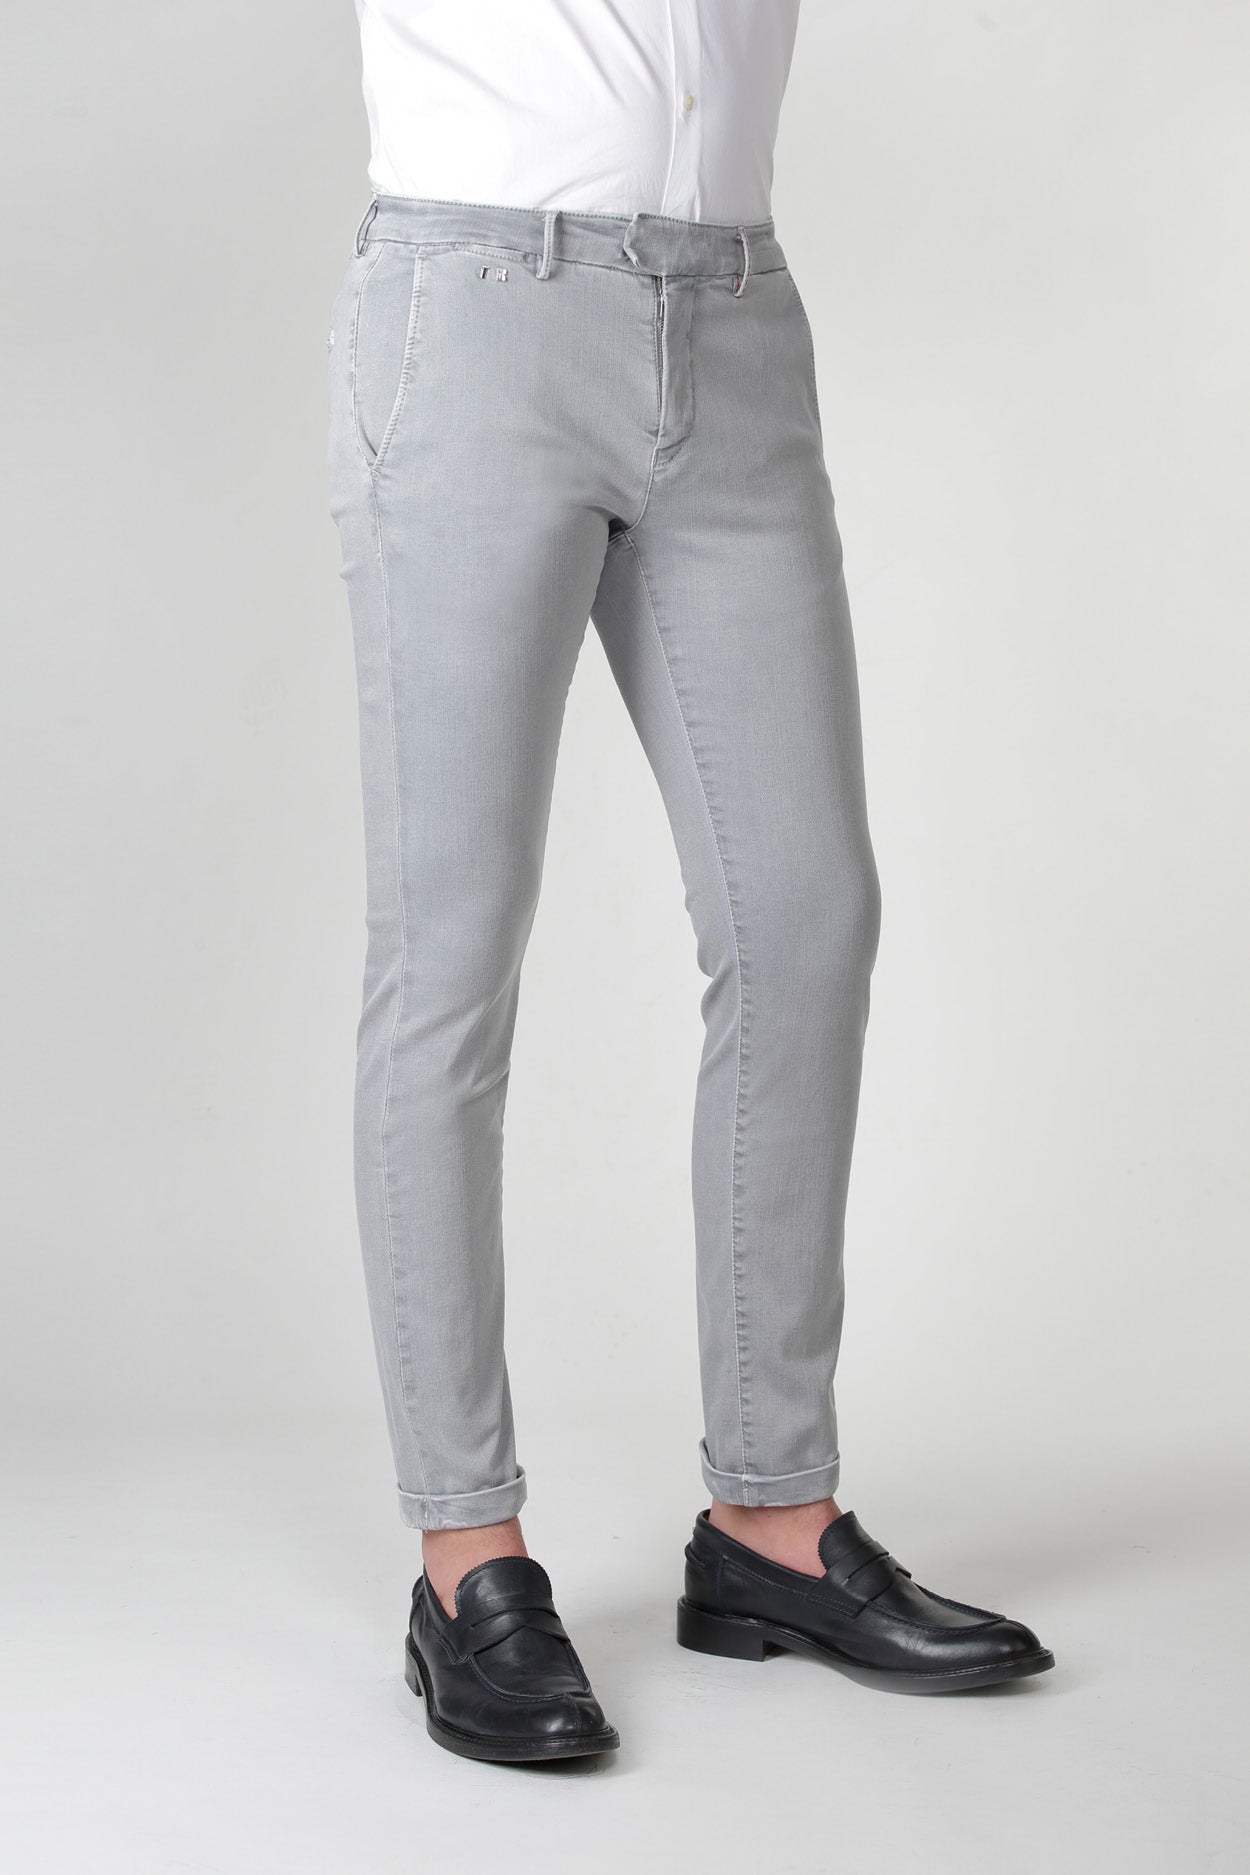 Tramarossa Jeans - COLORED SUPERSTRETCH GABARDINE - Model: LUIS SLIM